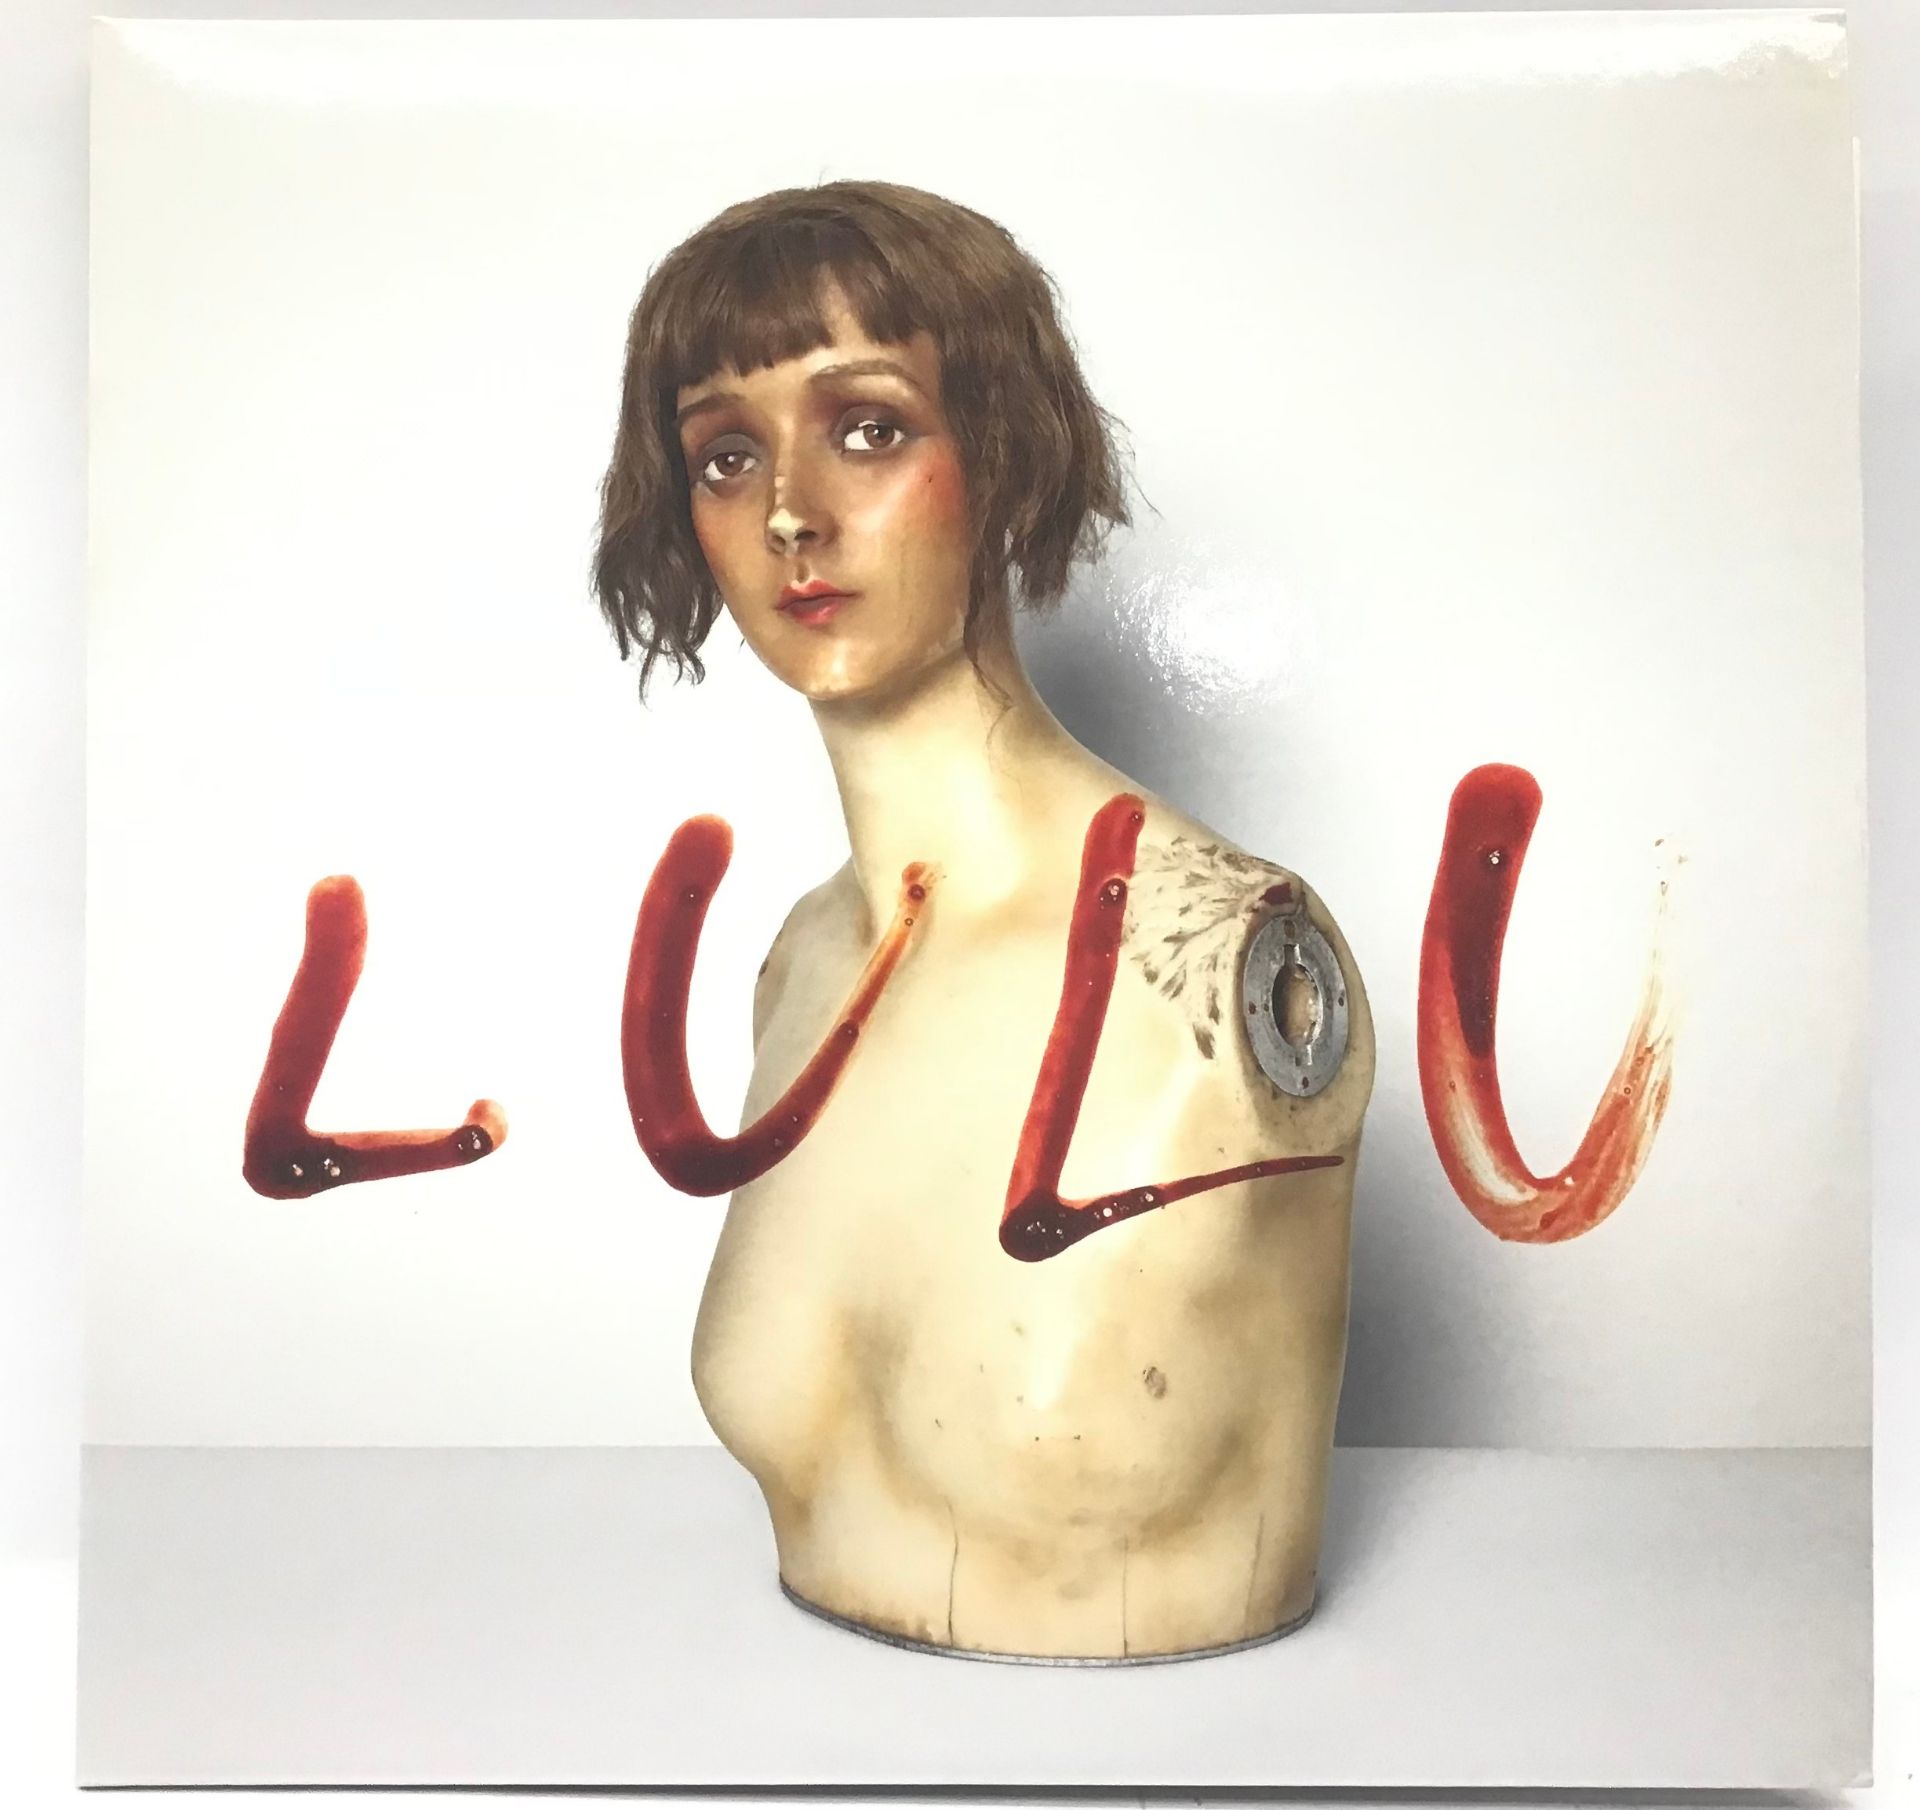 LOU REED & METALLICA - LULU - RARE LP RECORD. This double album is found here on Vertigo Records